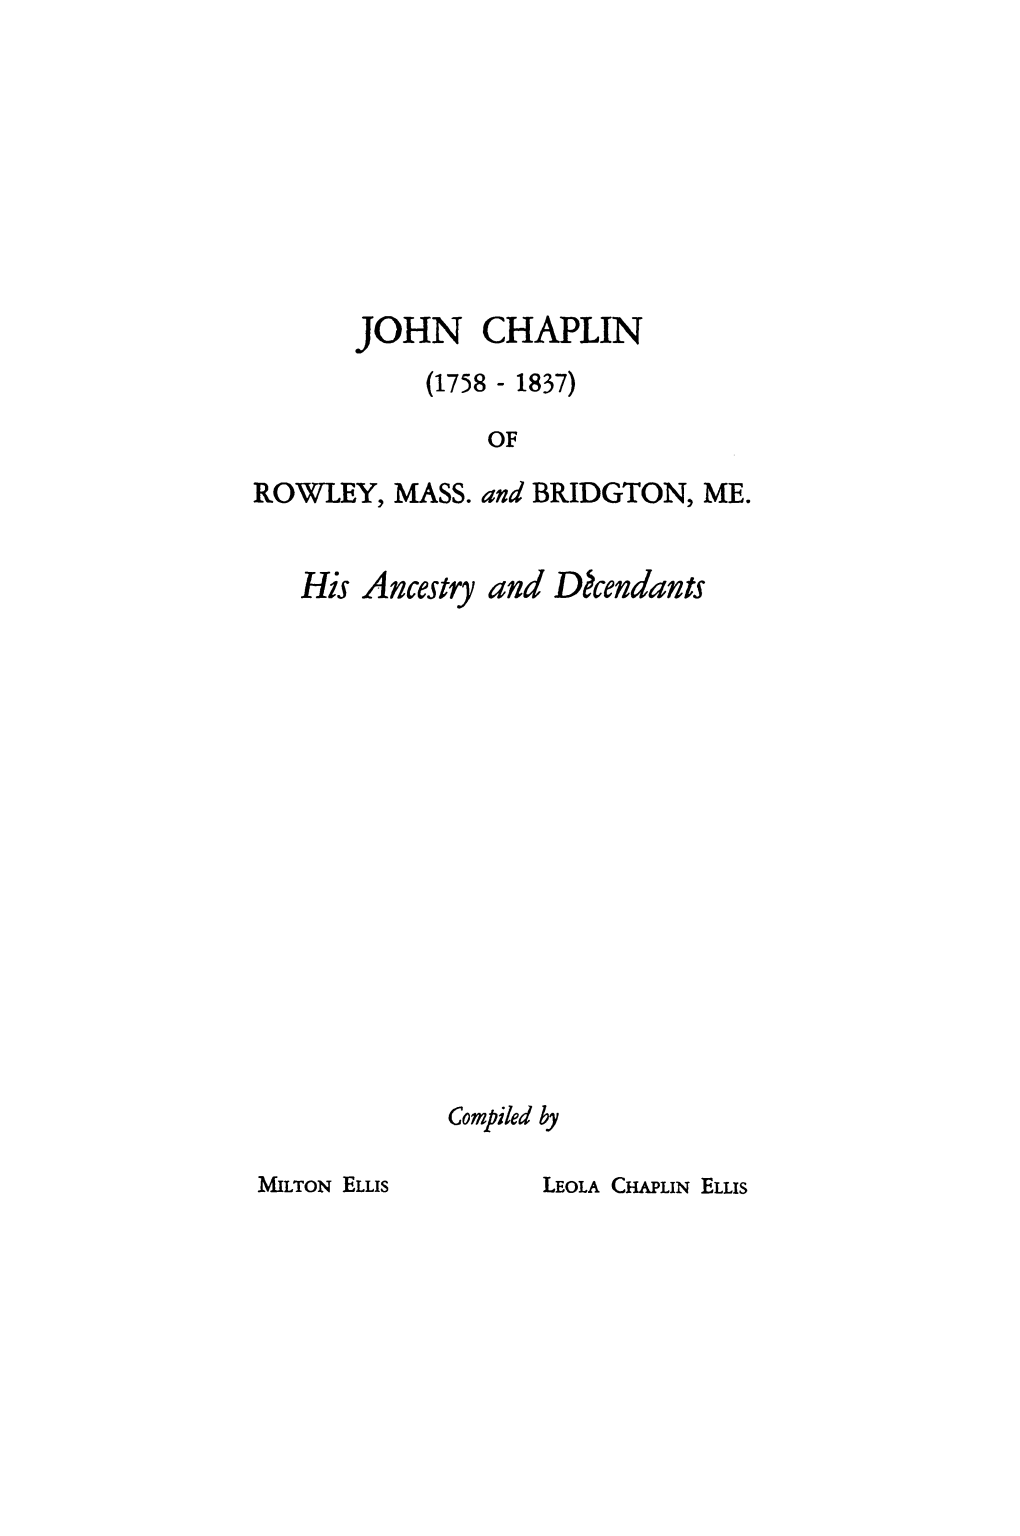 JOHN CHAPLIN His Ancestry and Dlcendants